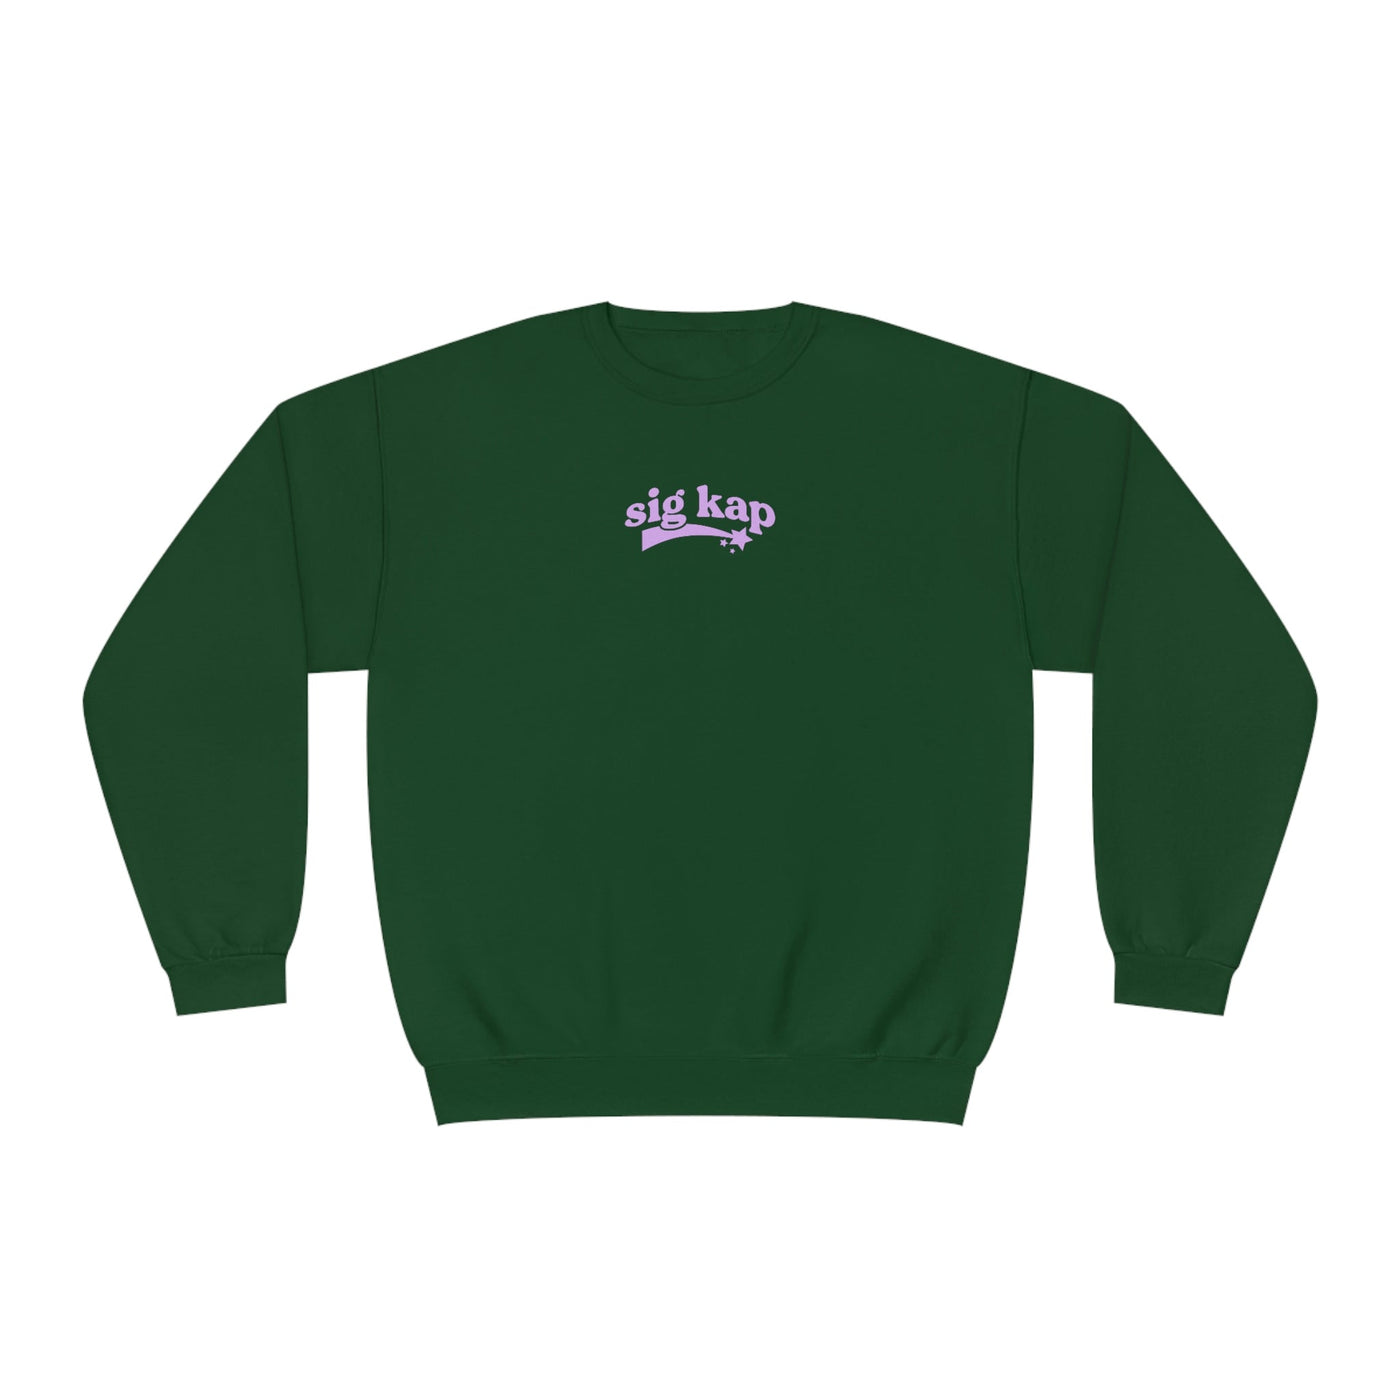 Sigma Kappa Crewneck Sweatshirt | Be Kind to the Planet Trendy Sorority Crewneck